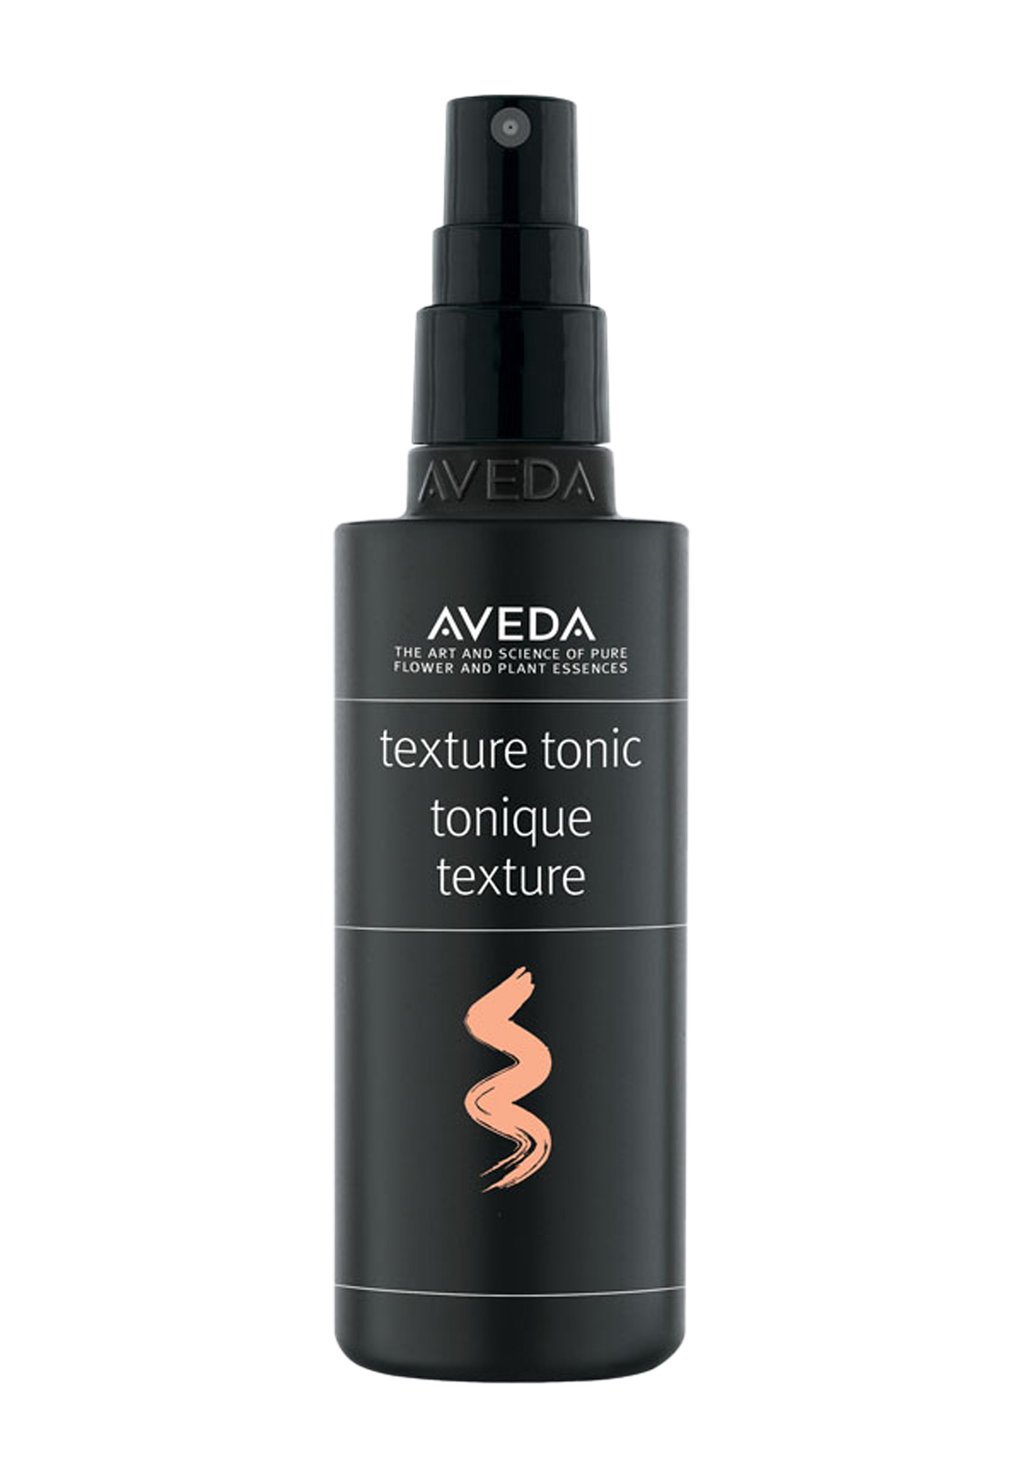 aveda тоник спрей для создания текстуры texture tonic Стайлинг TEXTURE TONIC Aveda